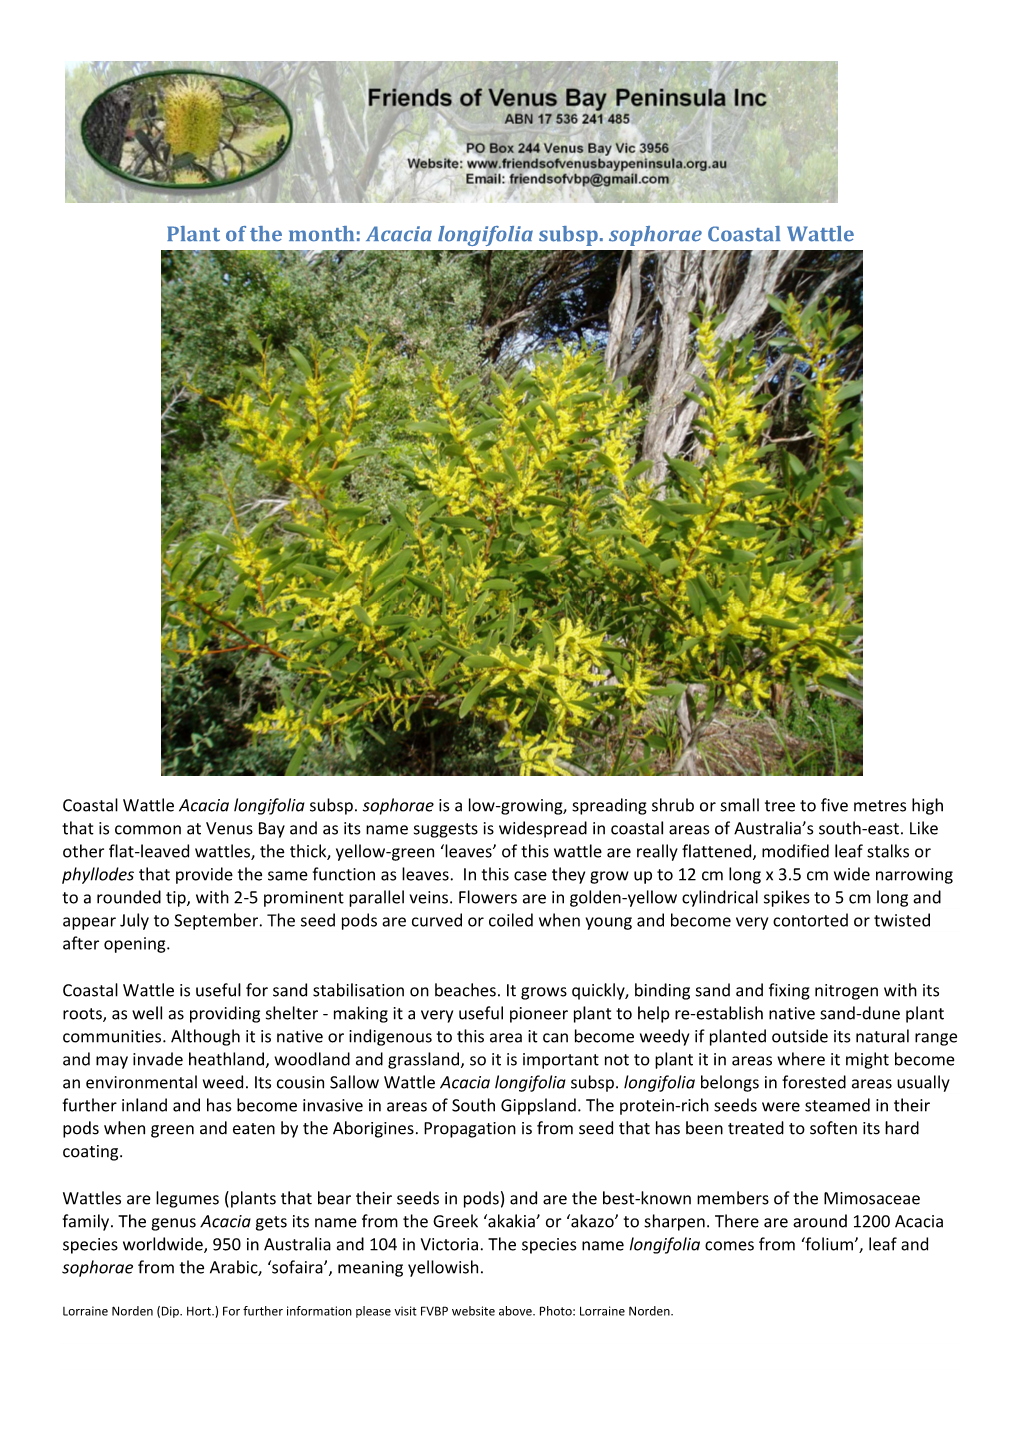 Coastal Wattle Acacia Longifolia Subsp. Sophorae